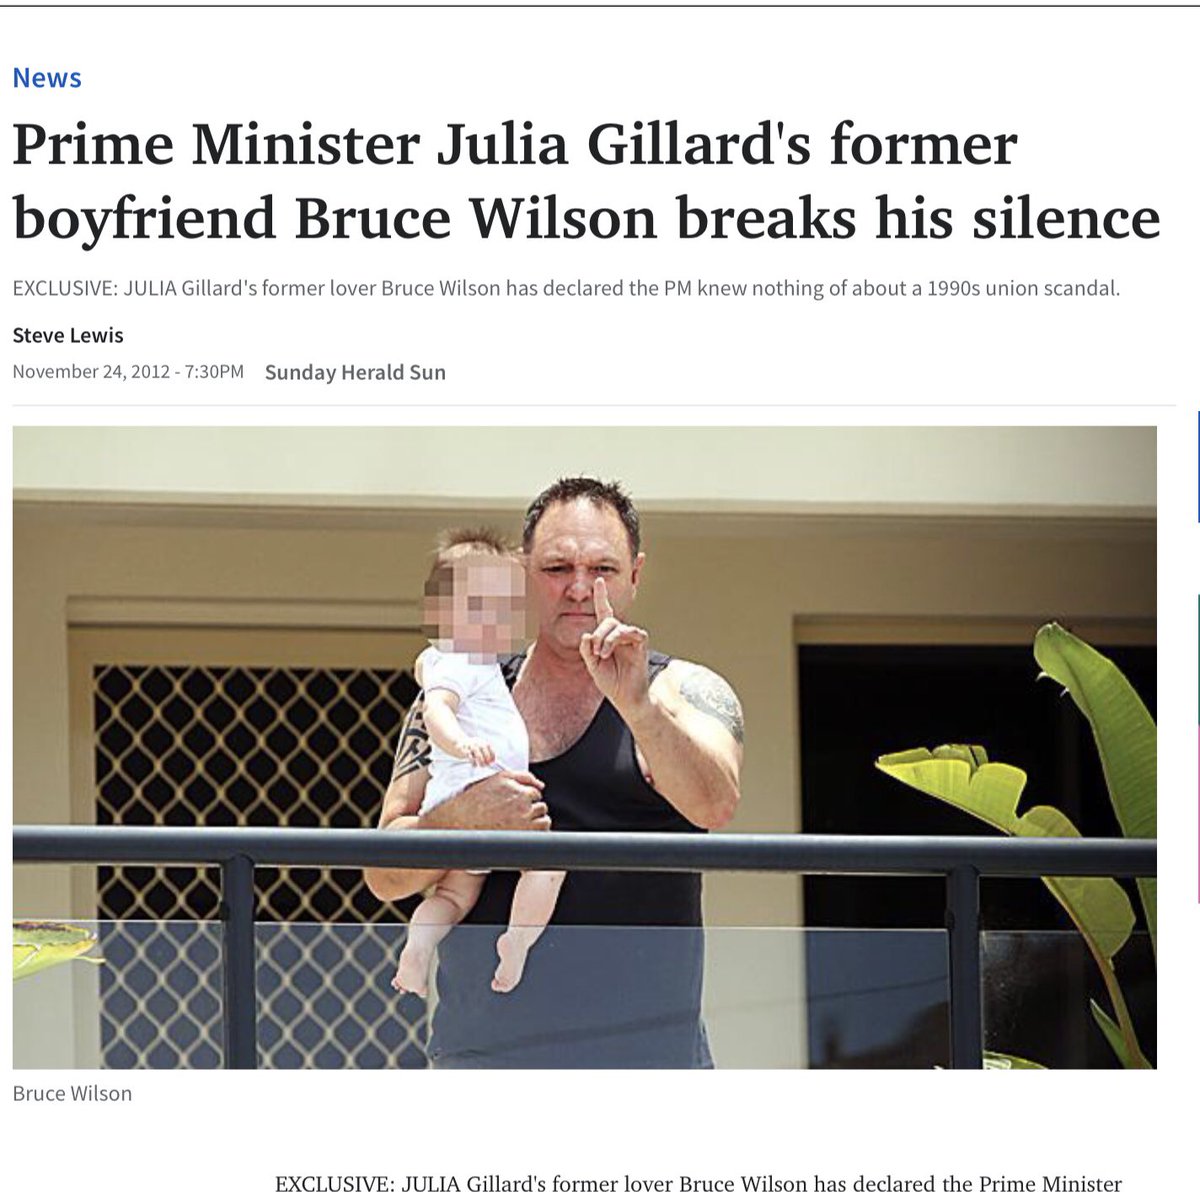  https://www.heraldsun.com.au/news/prime-minister-julia-gillards-former-boyfriend-bruce-wilson-breaks-his-silence/news-story/7ad444f6ba82a02dea290173e18b873a @ici_cam  @BoliqueAna